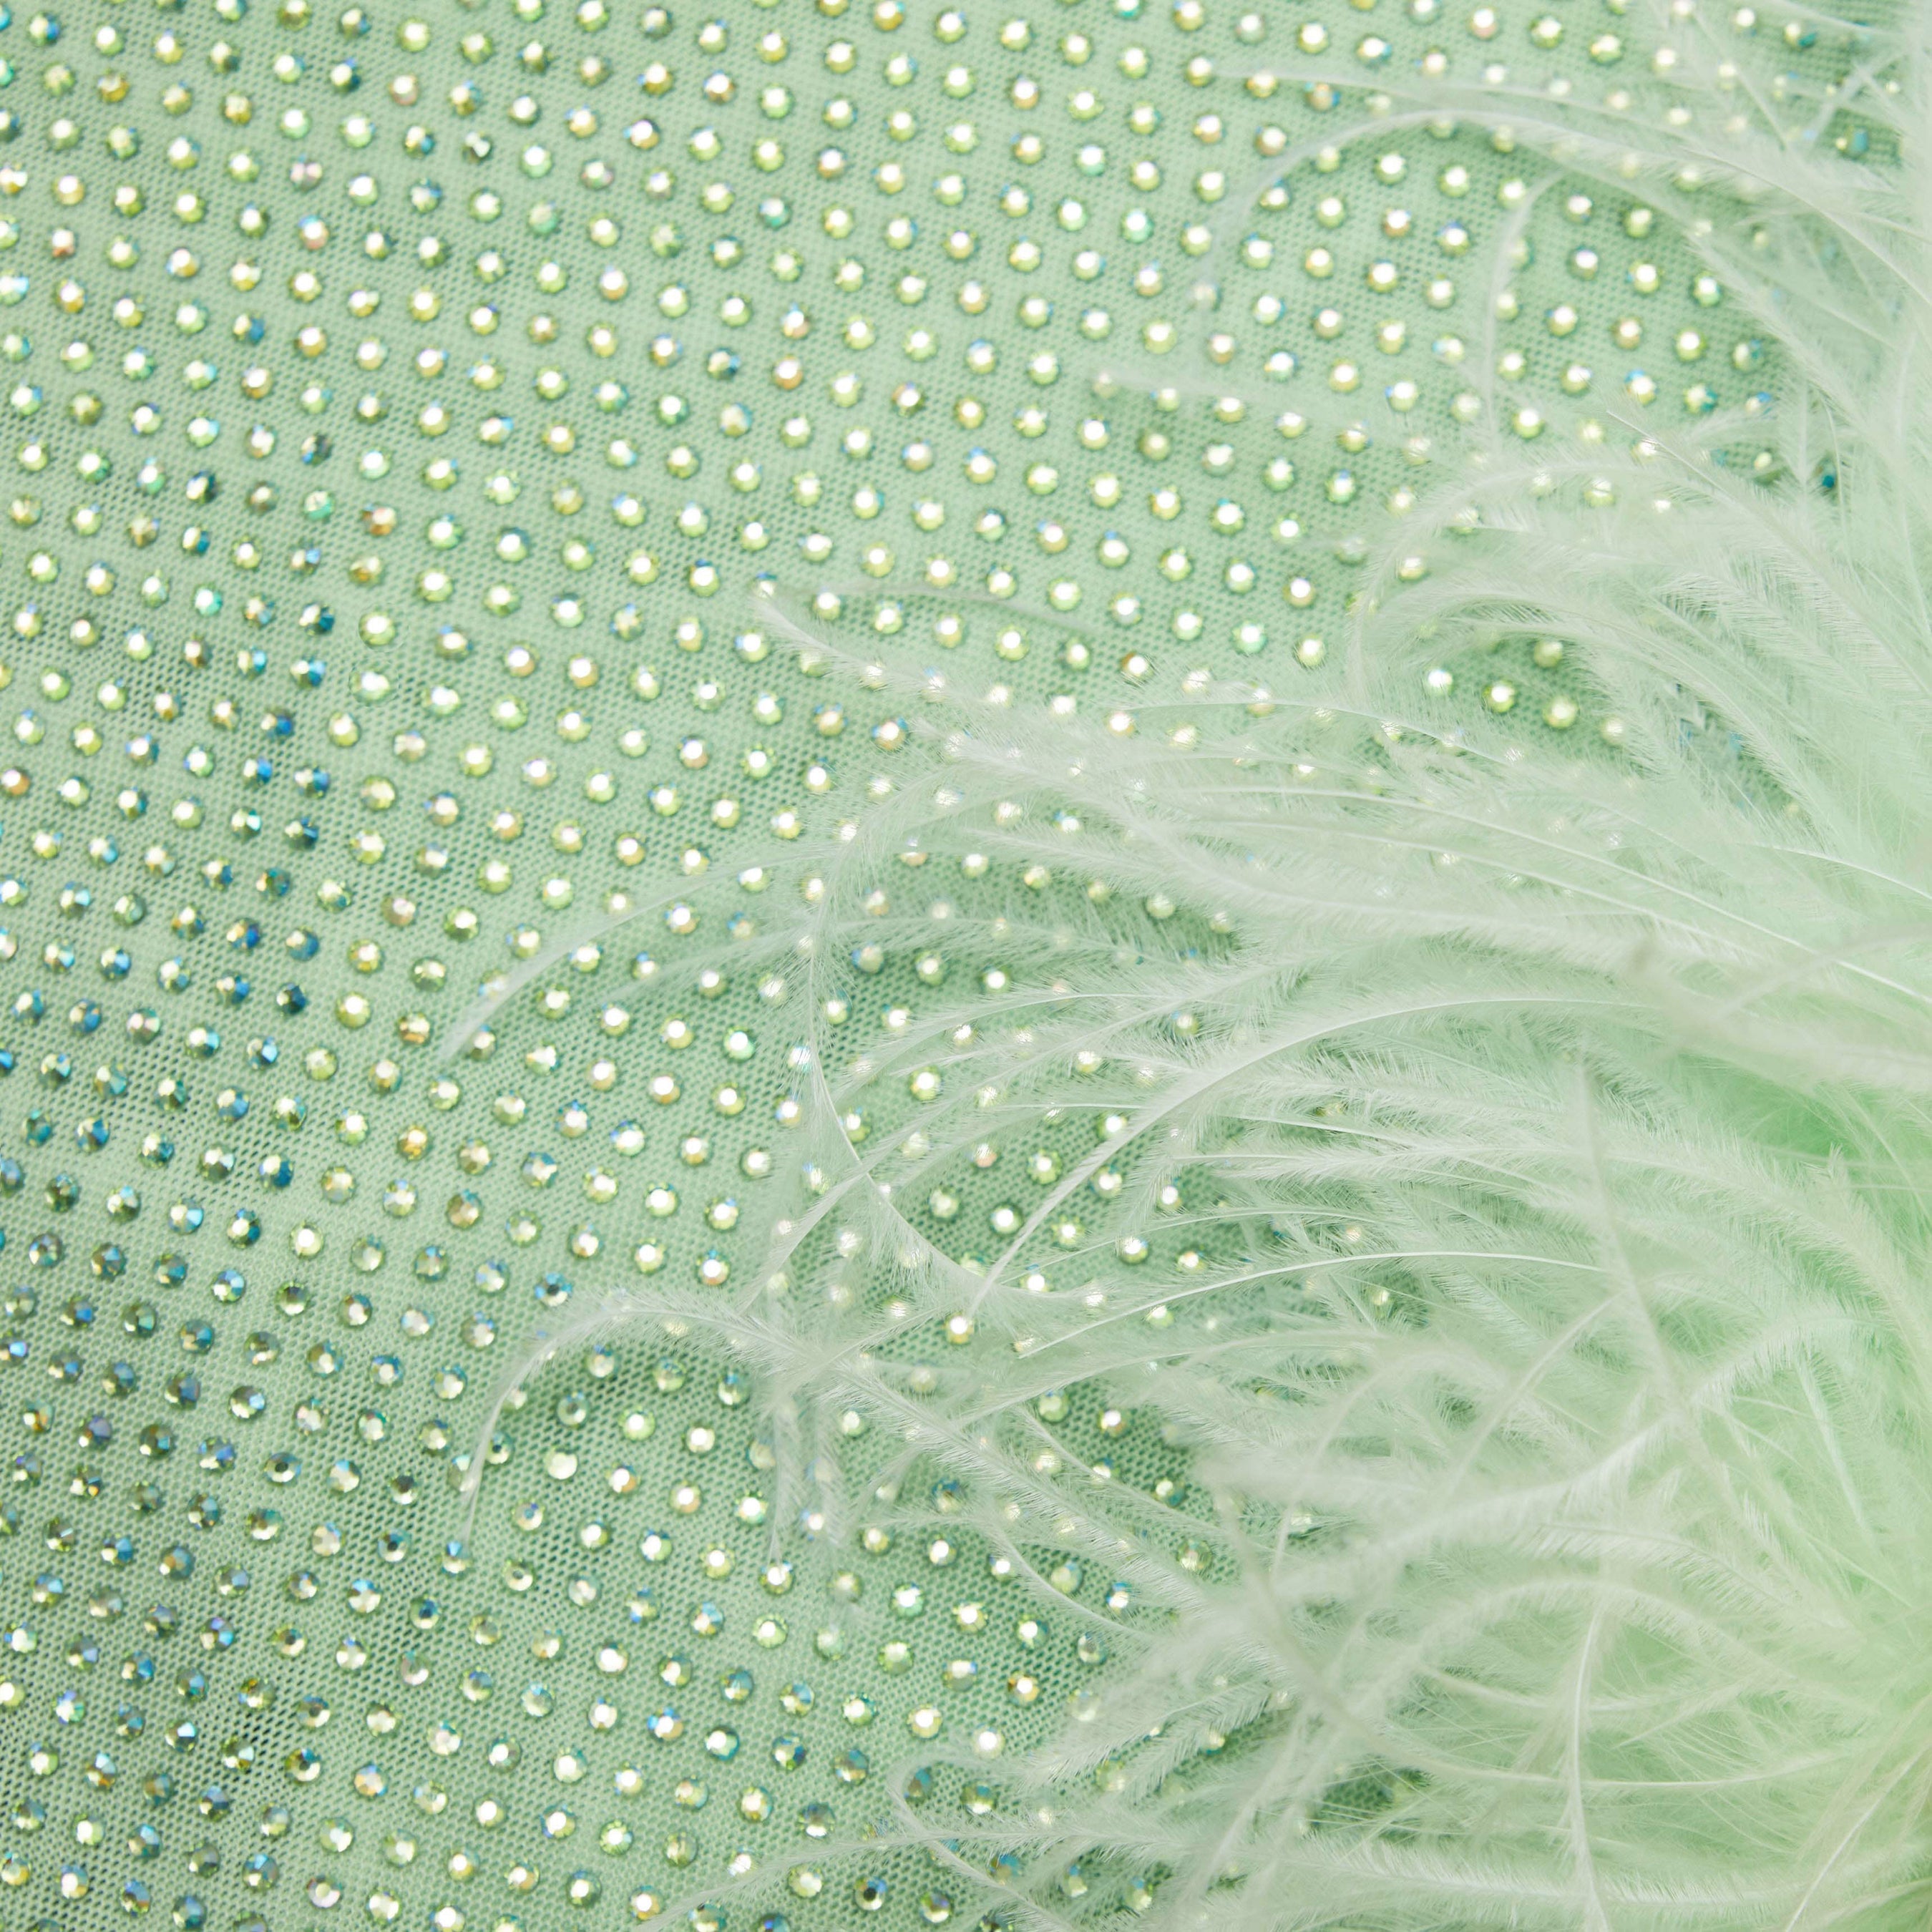 Green Rhinestone Feather Mini Dress